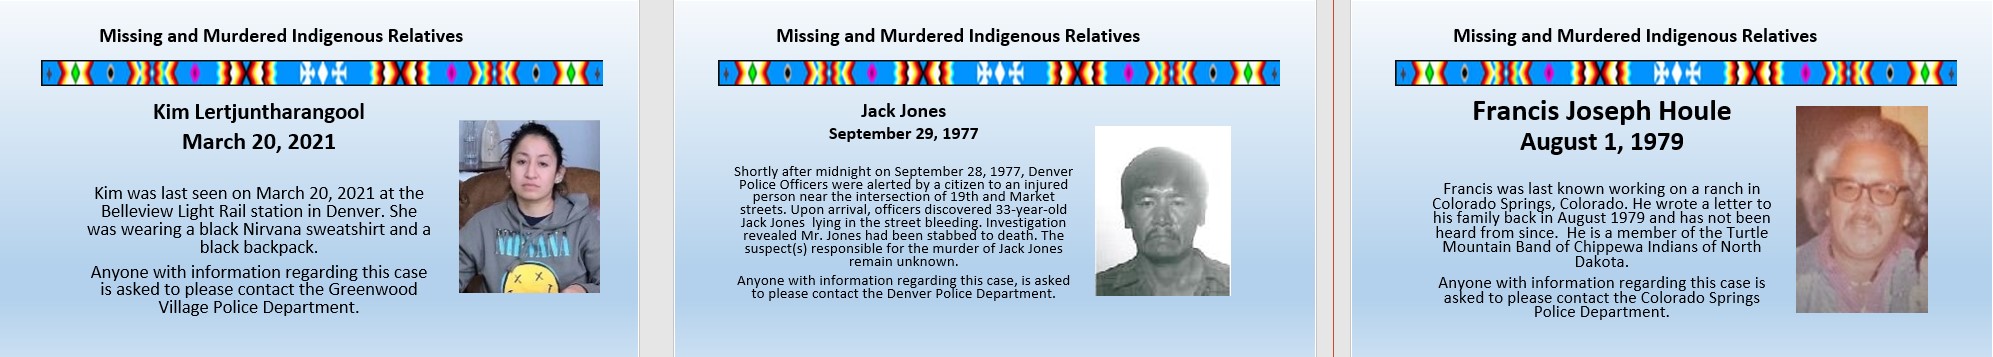 Pictures of three missing or murdered Indigenous Persons, Kim Lertjuntharangool, Jack Jones, Francis Joseph Houle